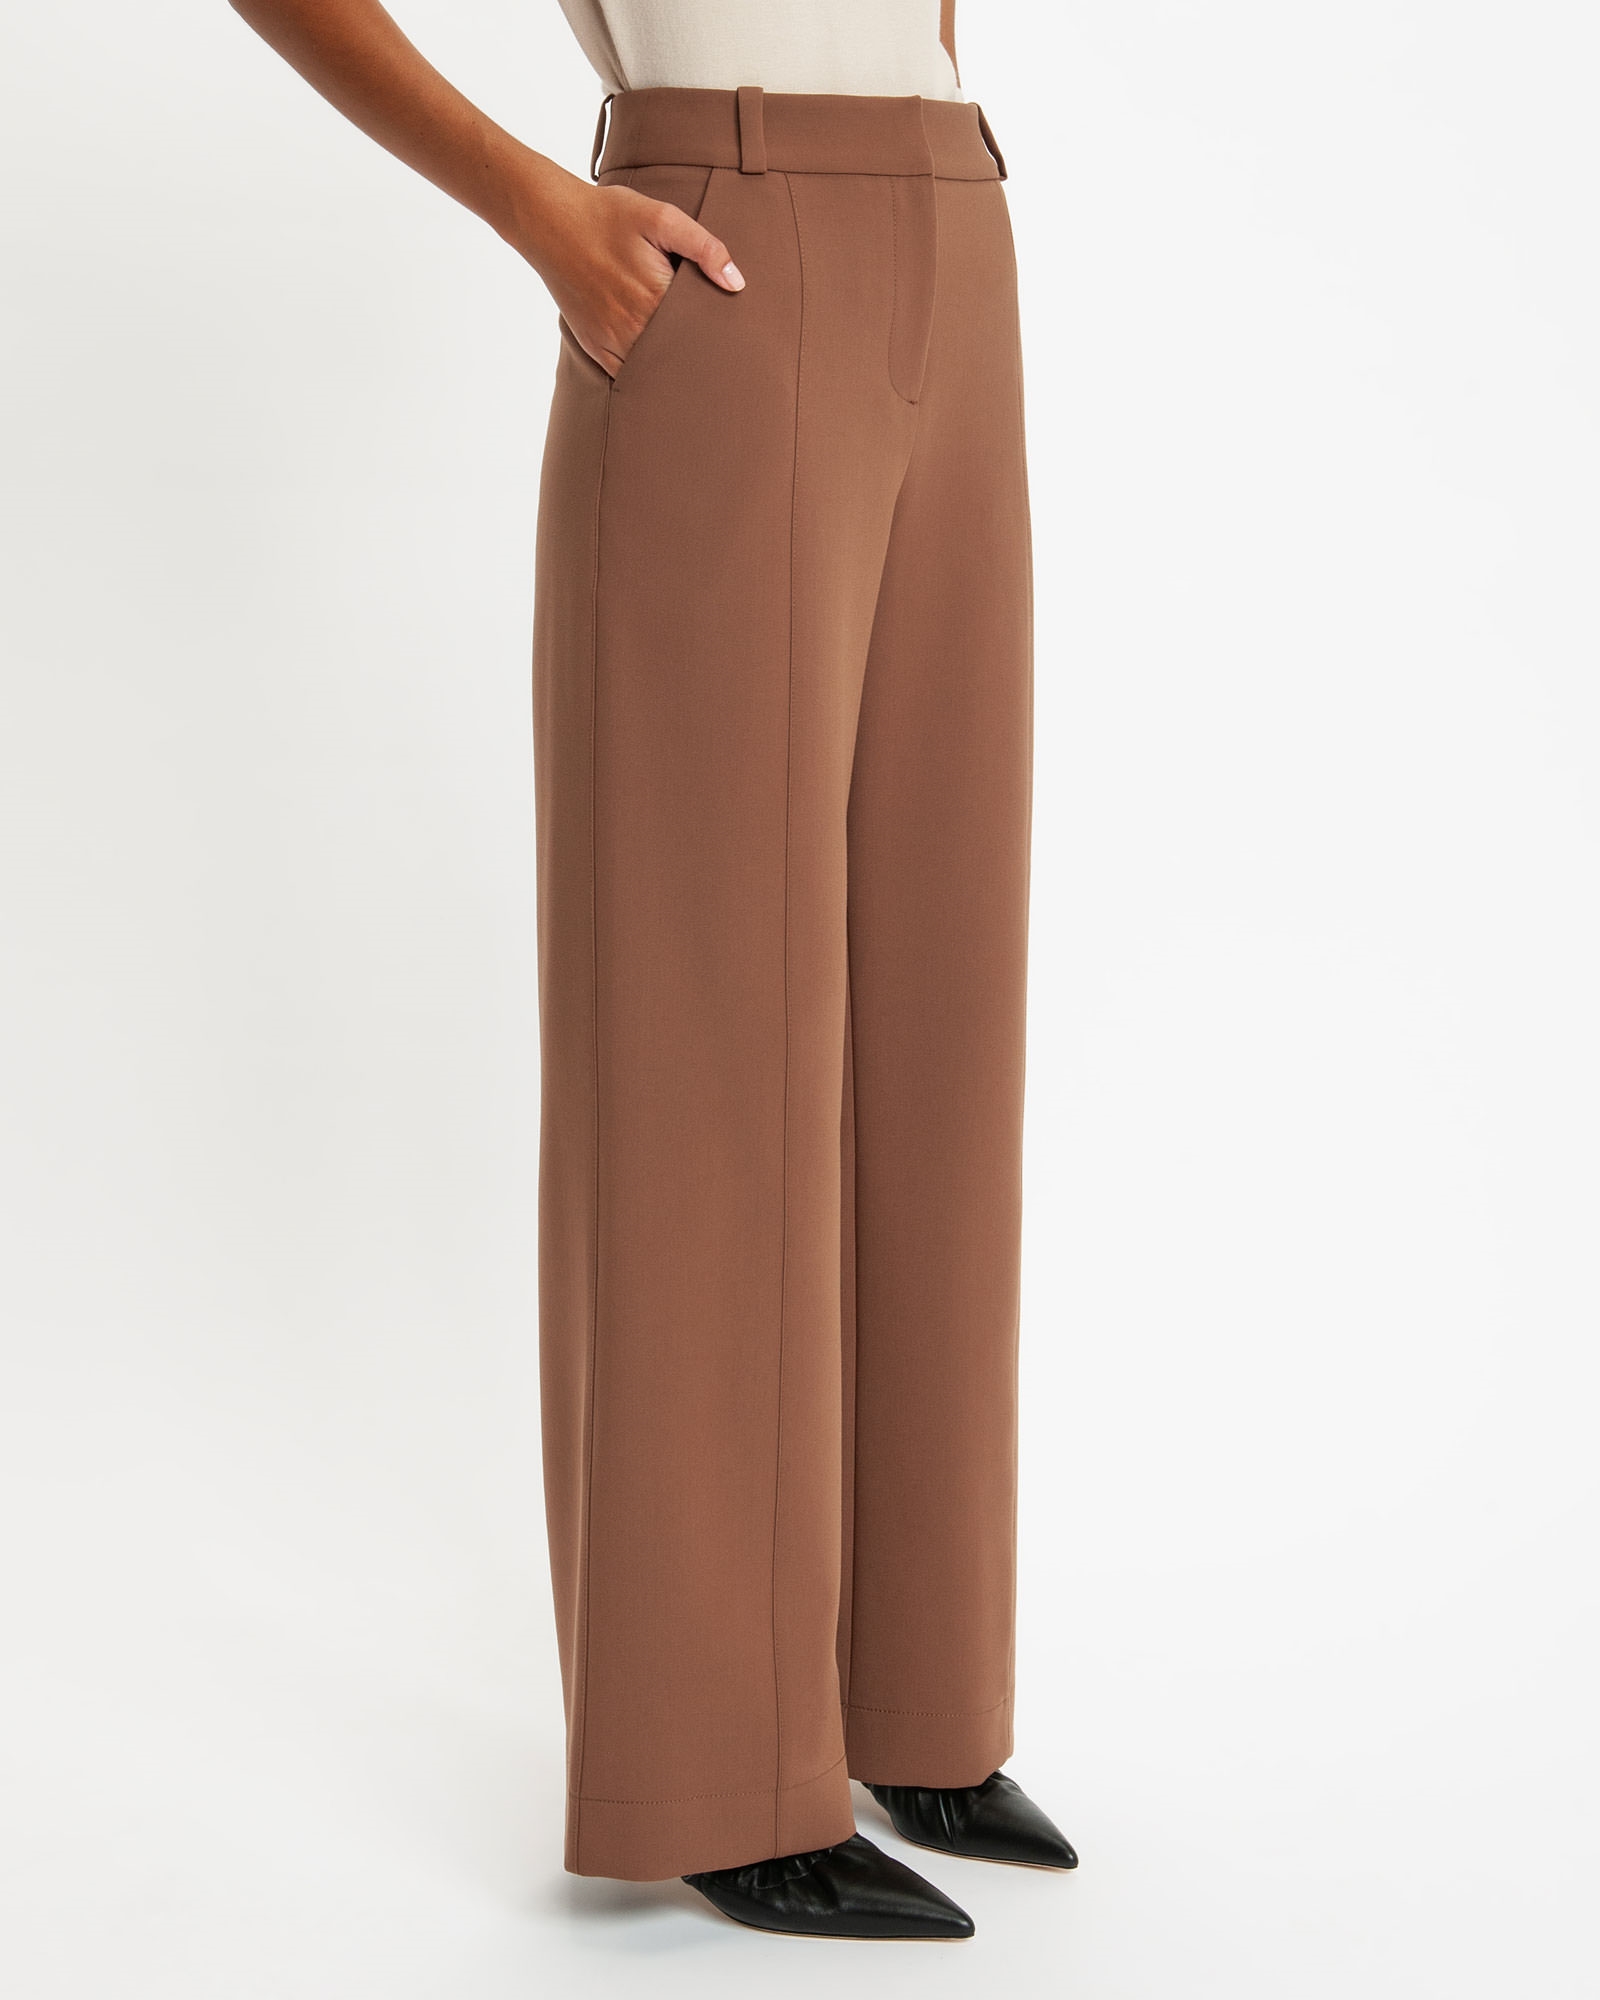 Pants  | Pinstitch Tailored Pant | 851 Chestnut